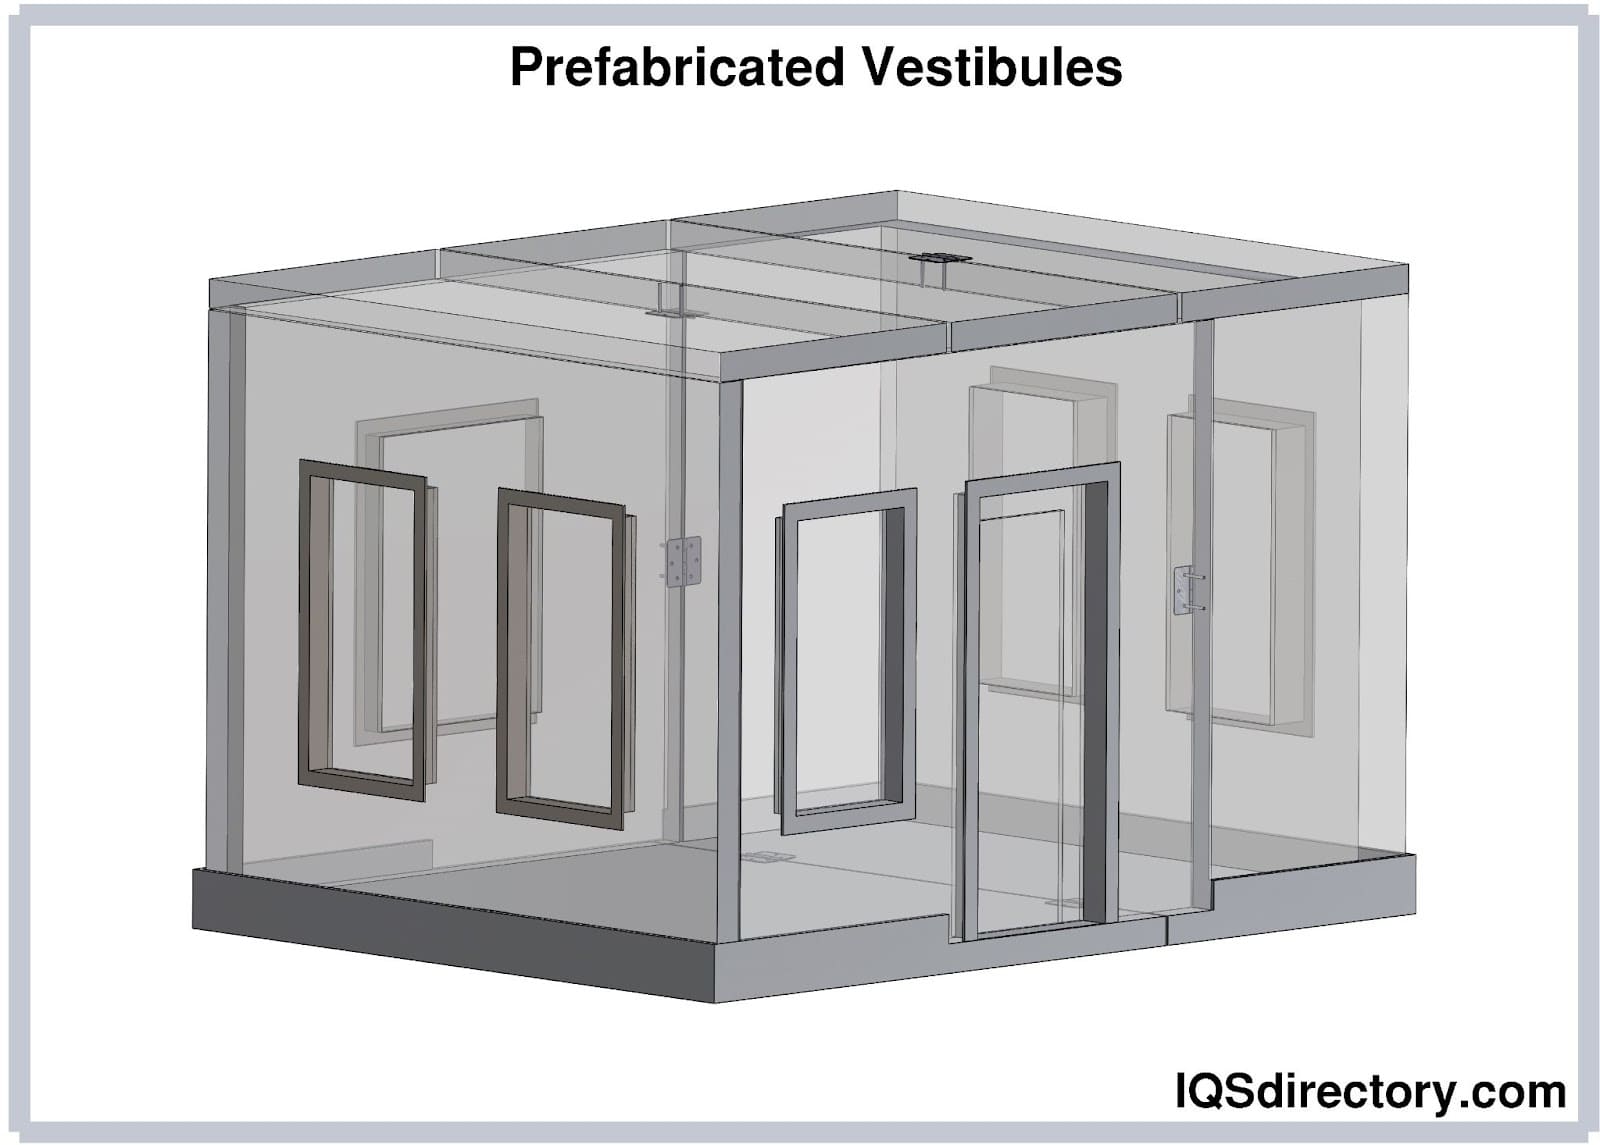 Prefabricated Vestibules